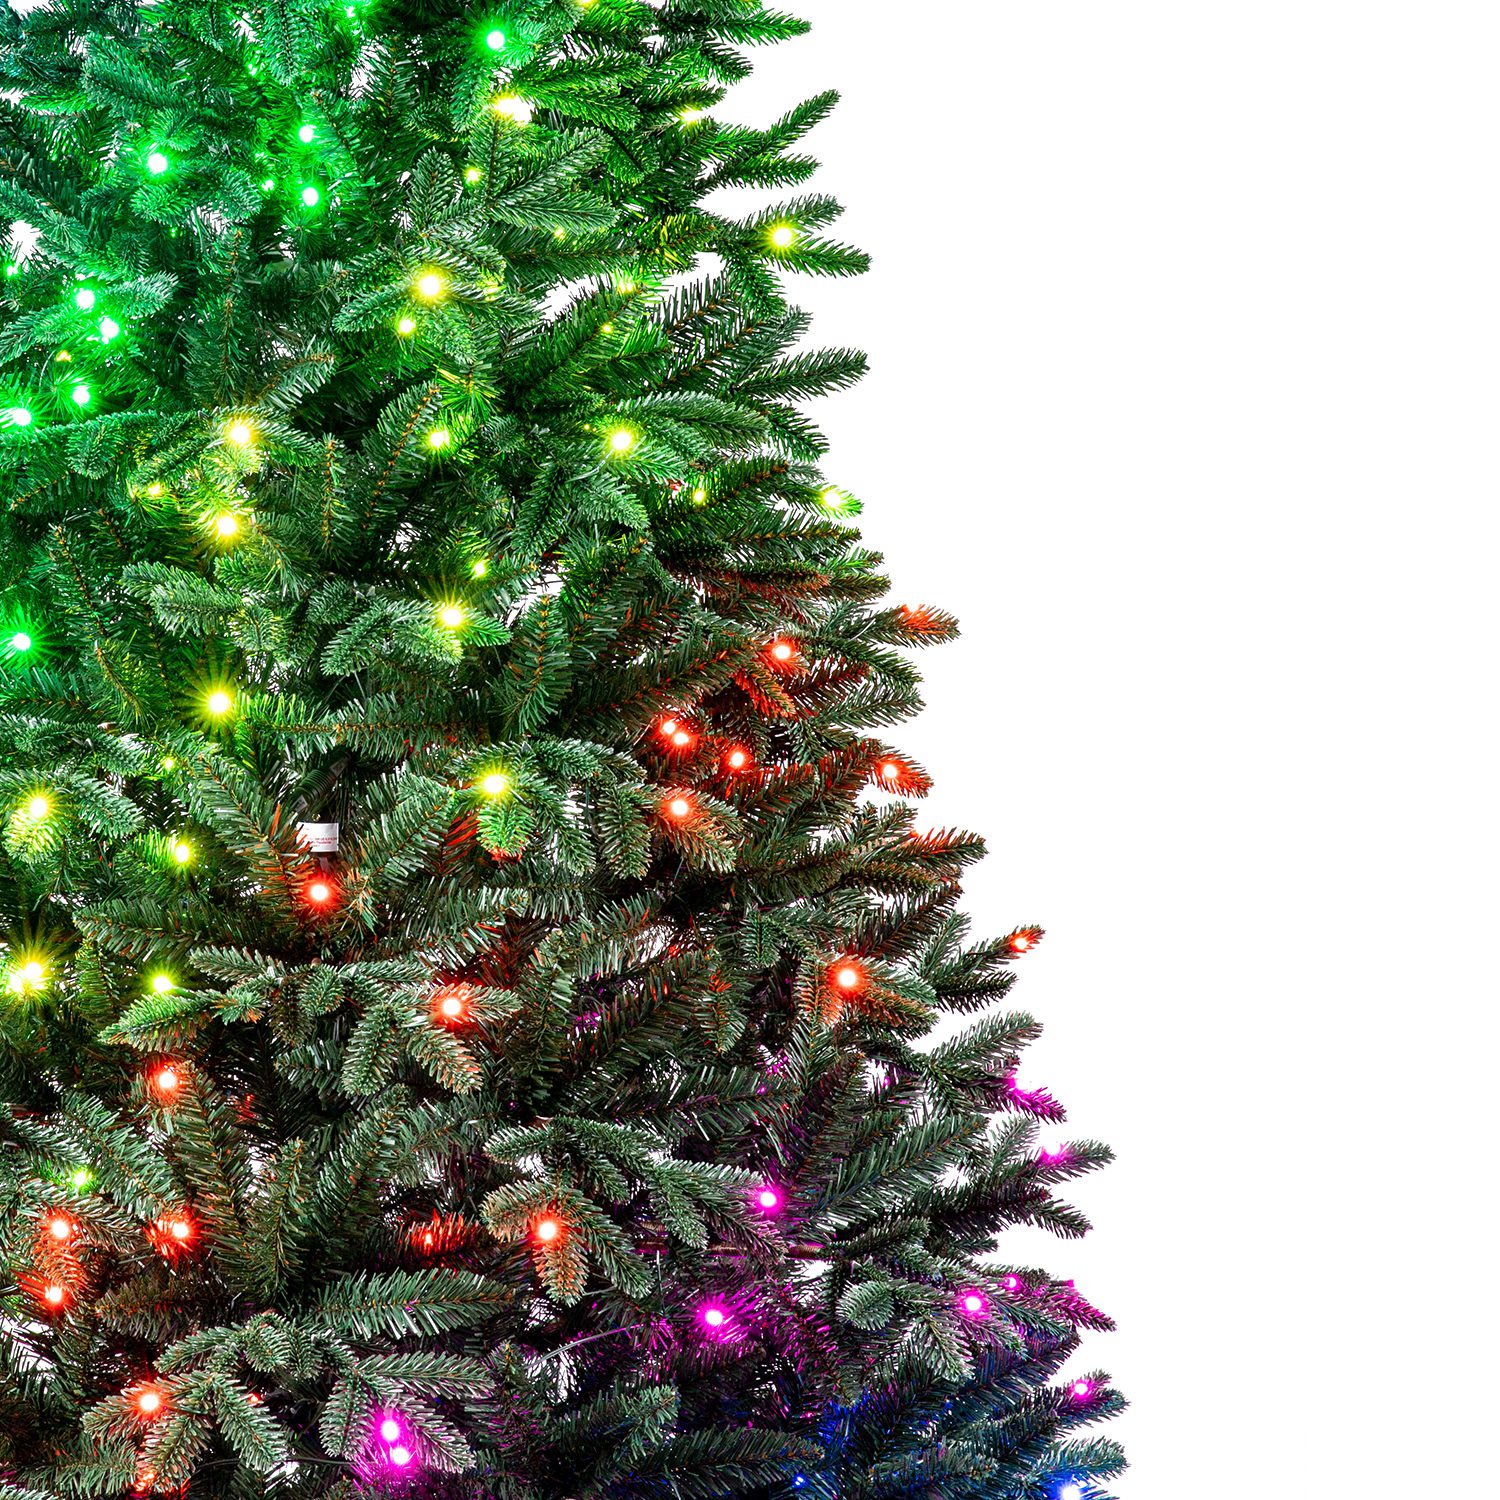 Christmas trees colourful lights